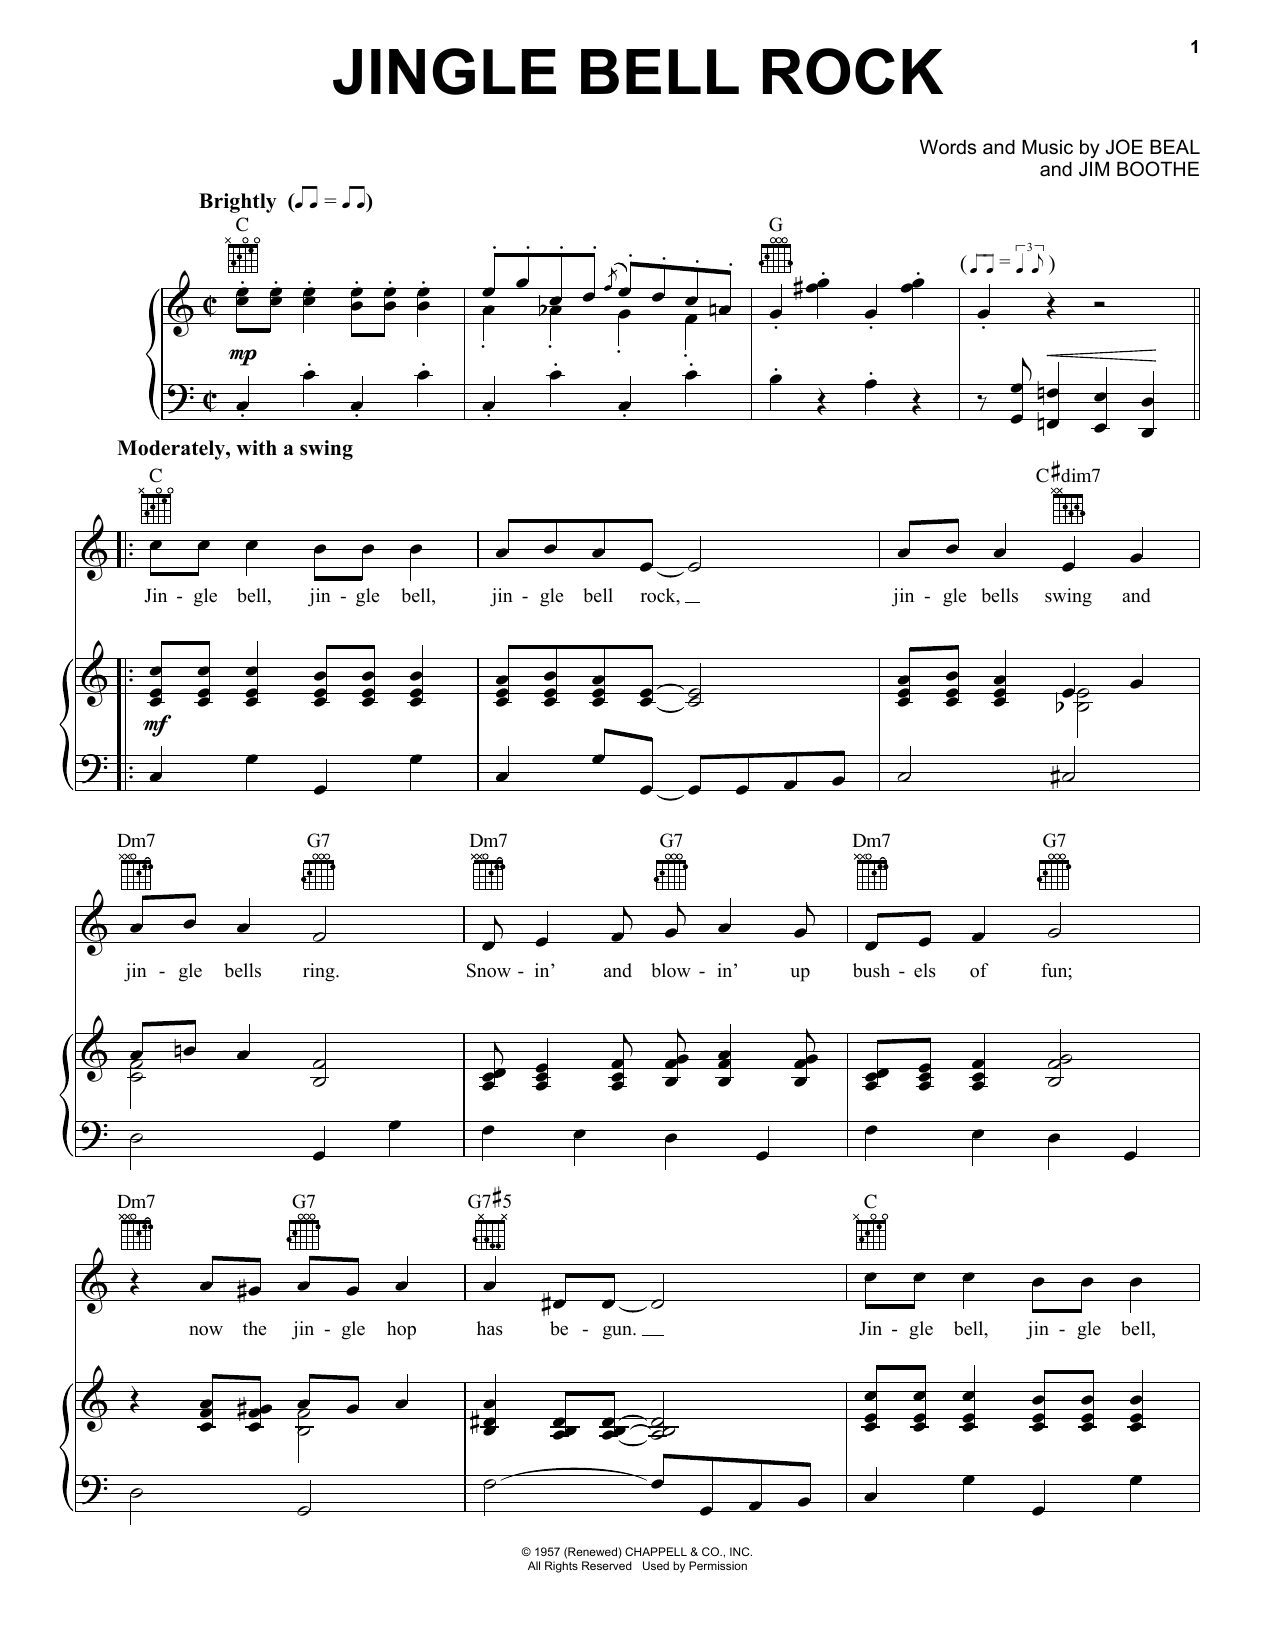 Jingle-Bell Rock sheet music